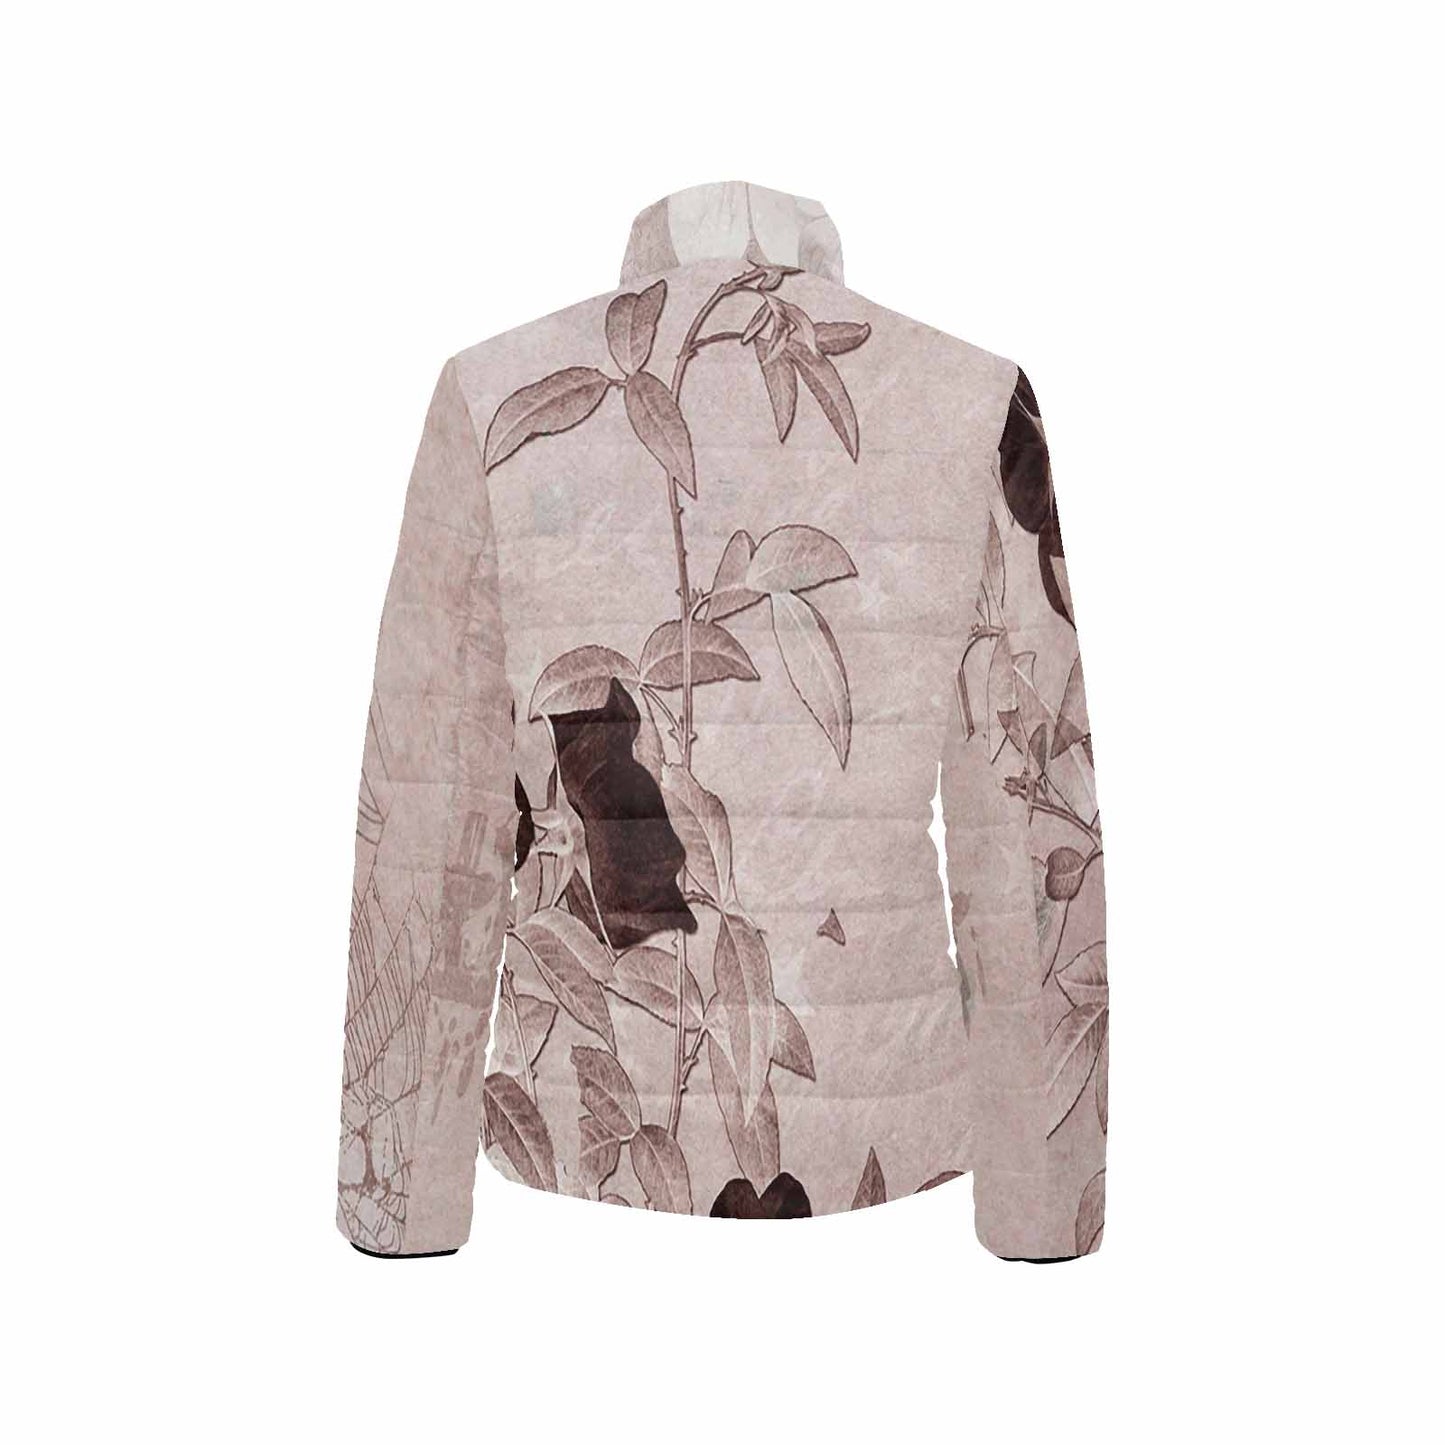 Antique general print quilted jacket, design 14